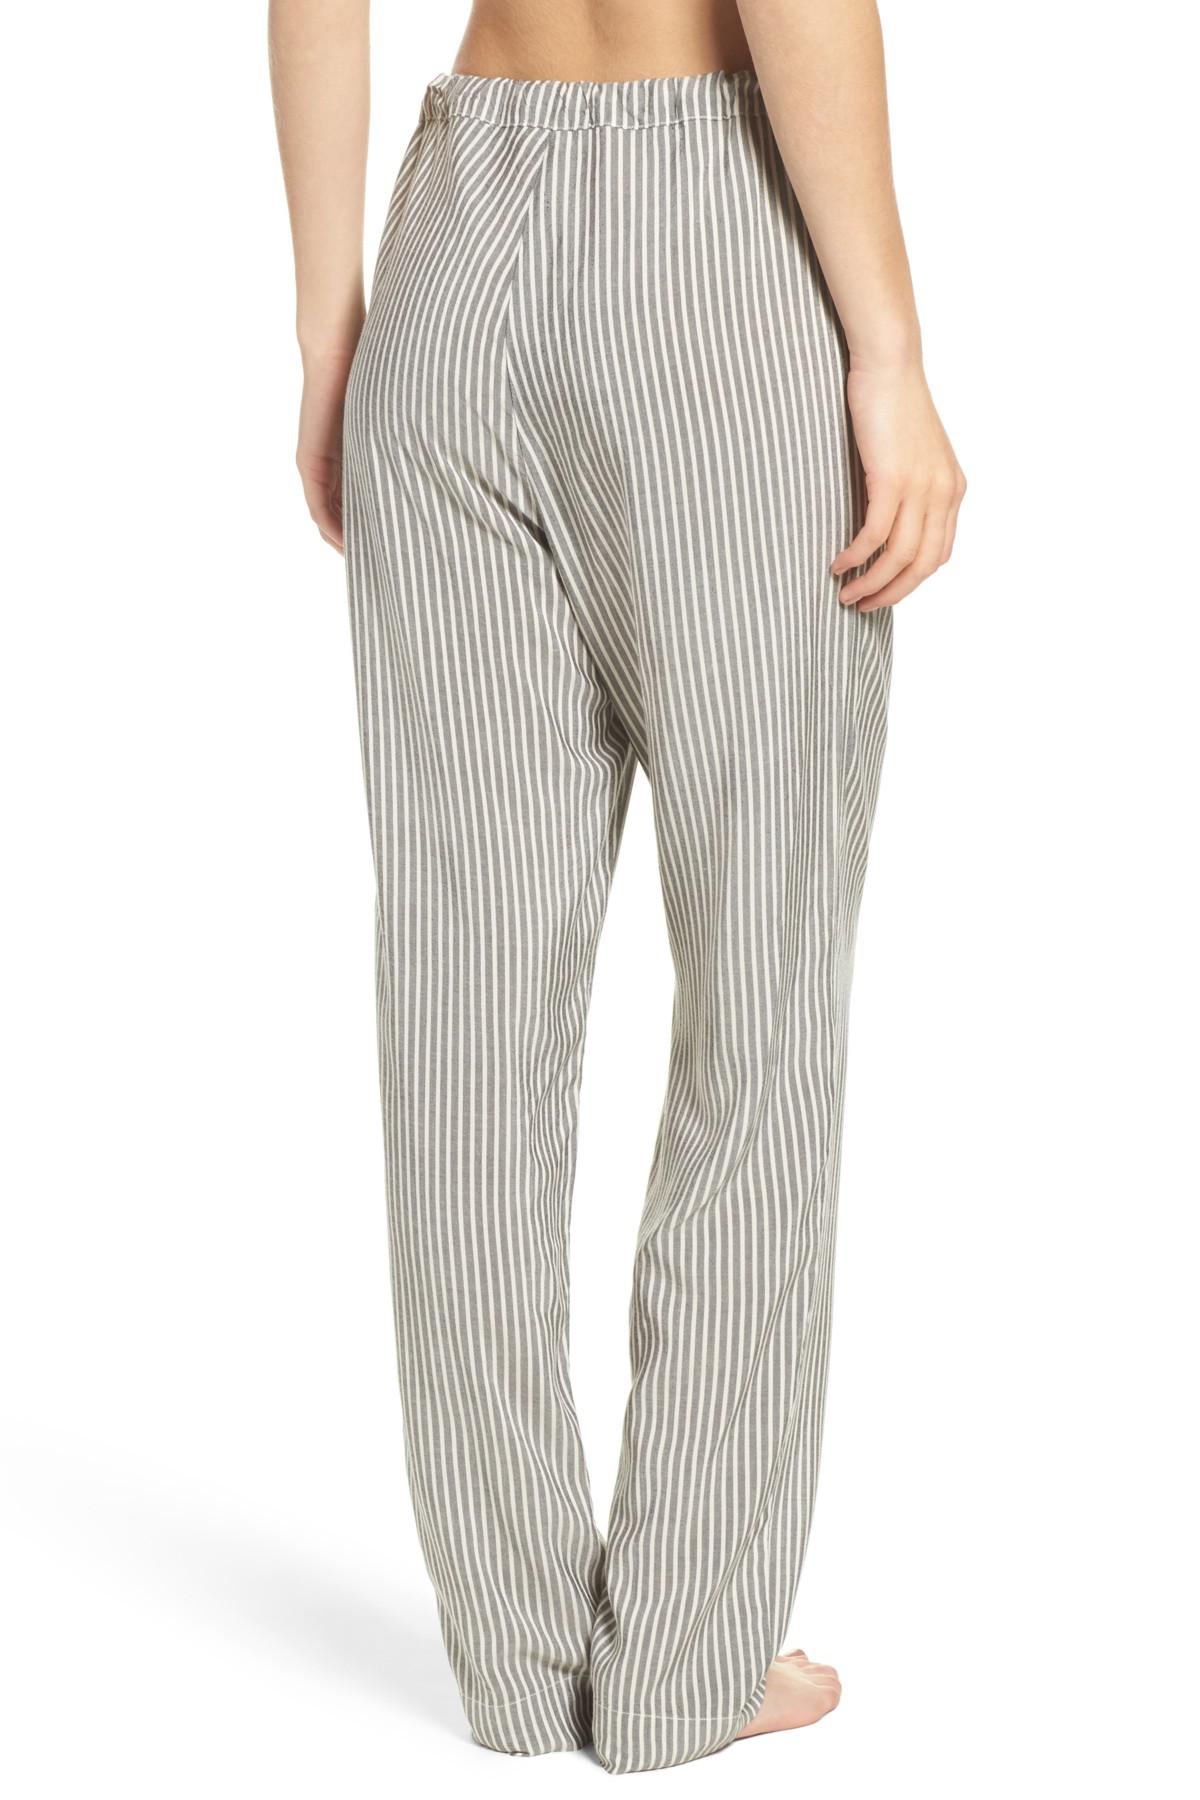 Lyst - Lacausa Stripe Pajama Pants in Gray